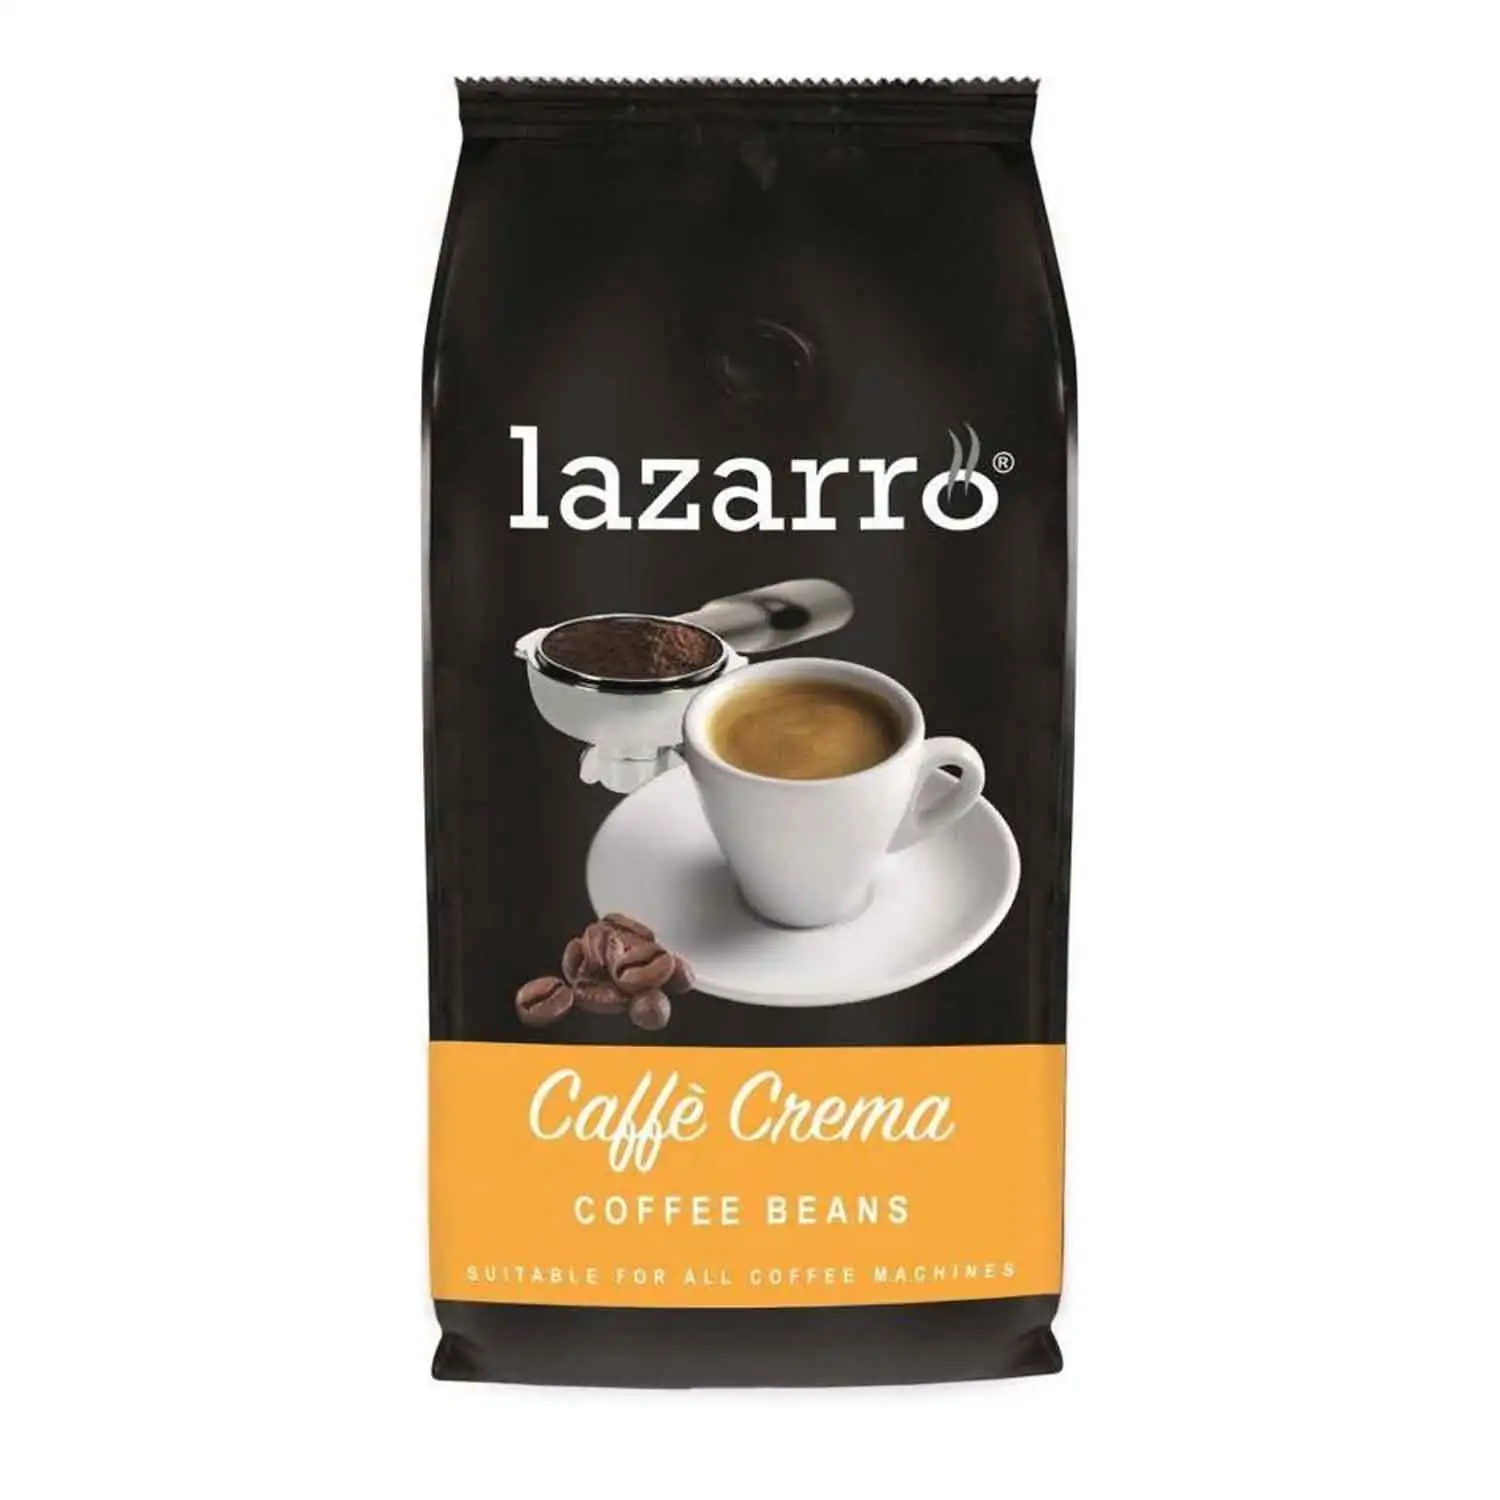 Lazarro coffee beans caffè crema 1kg - Buy at Real Tobacco